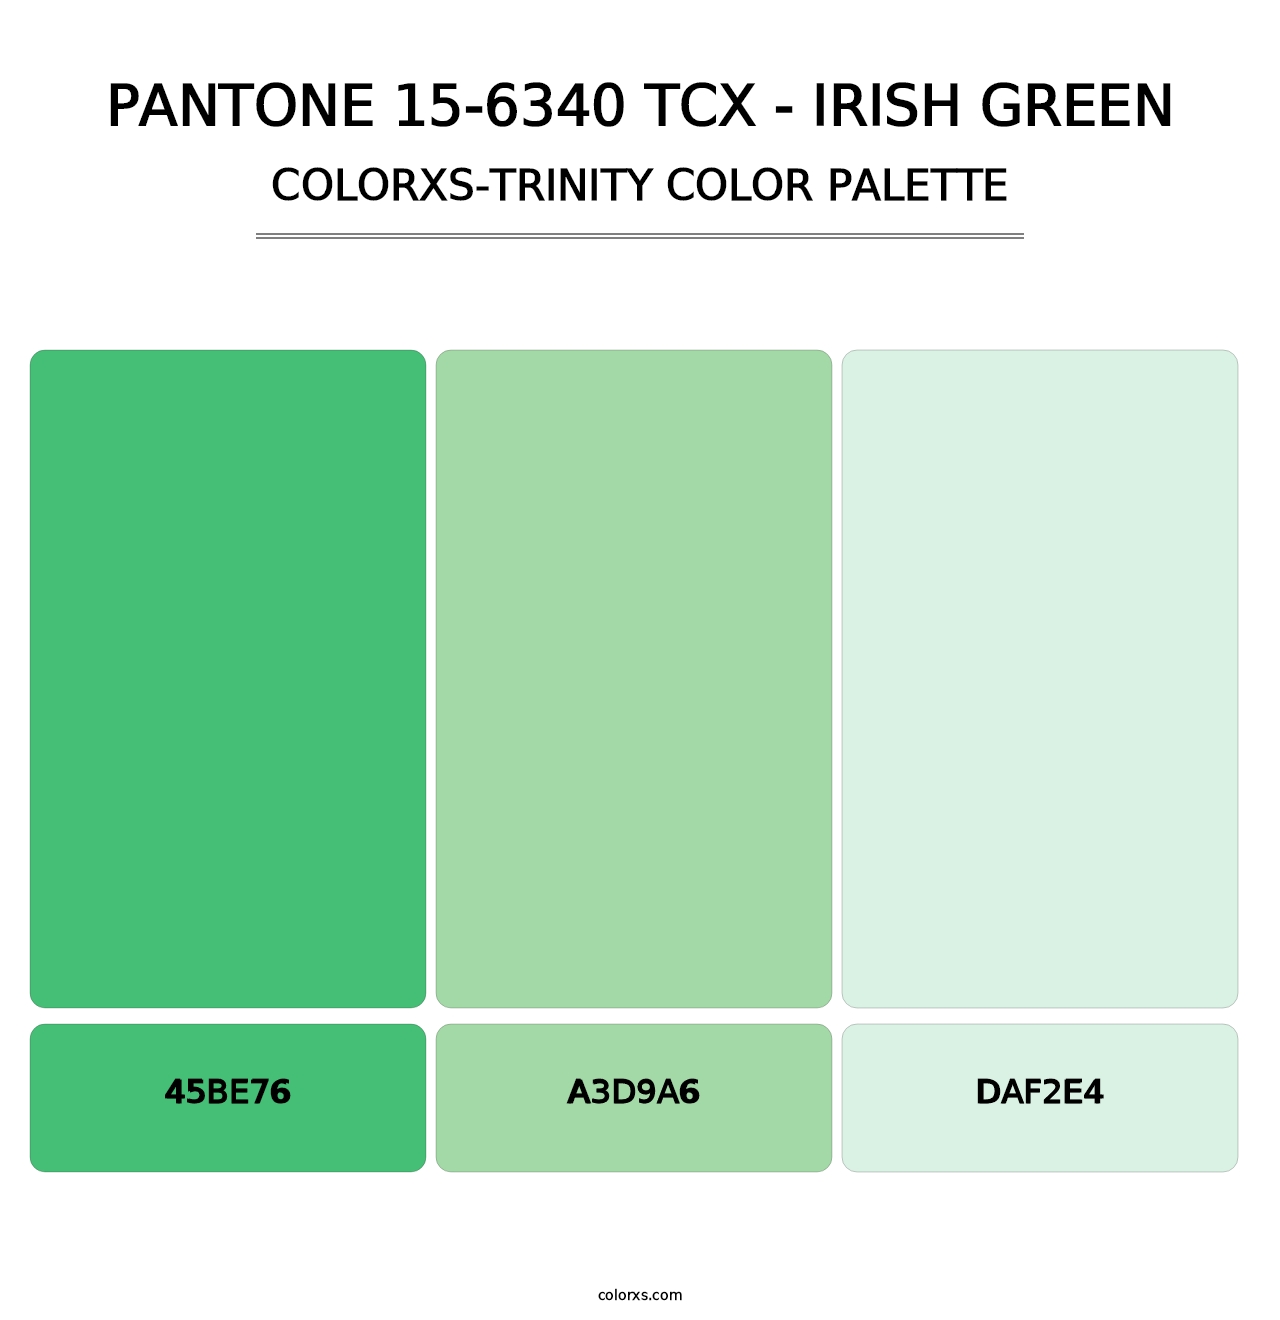 PANTONE 15-6340 TCX - Irish Green - Colorxs Trinity Palette